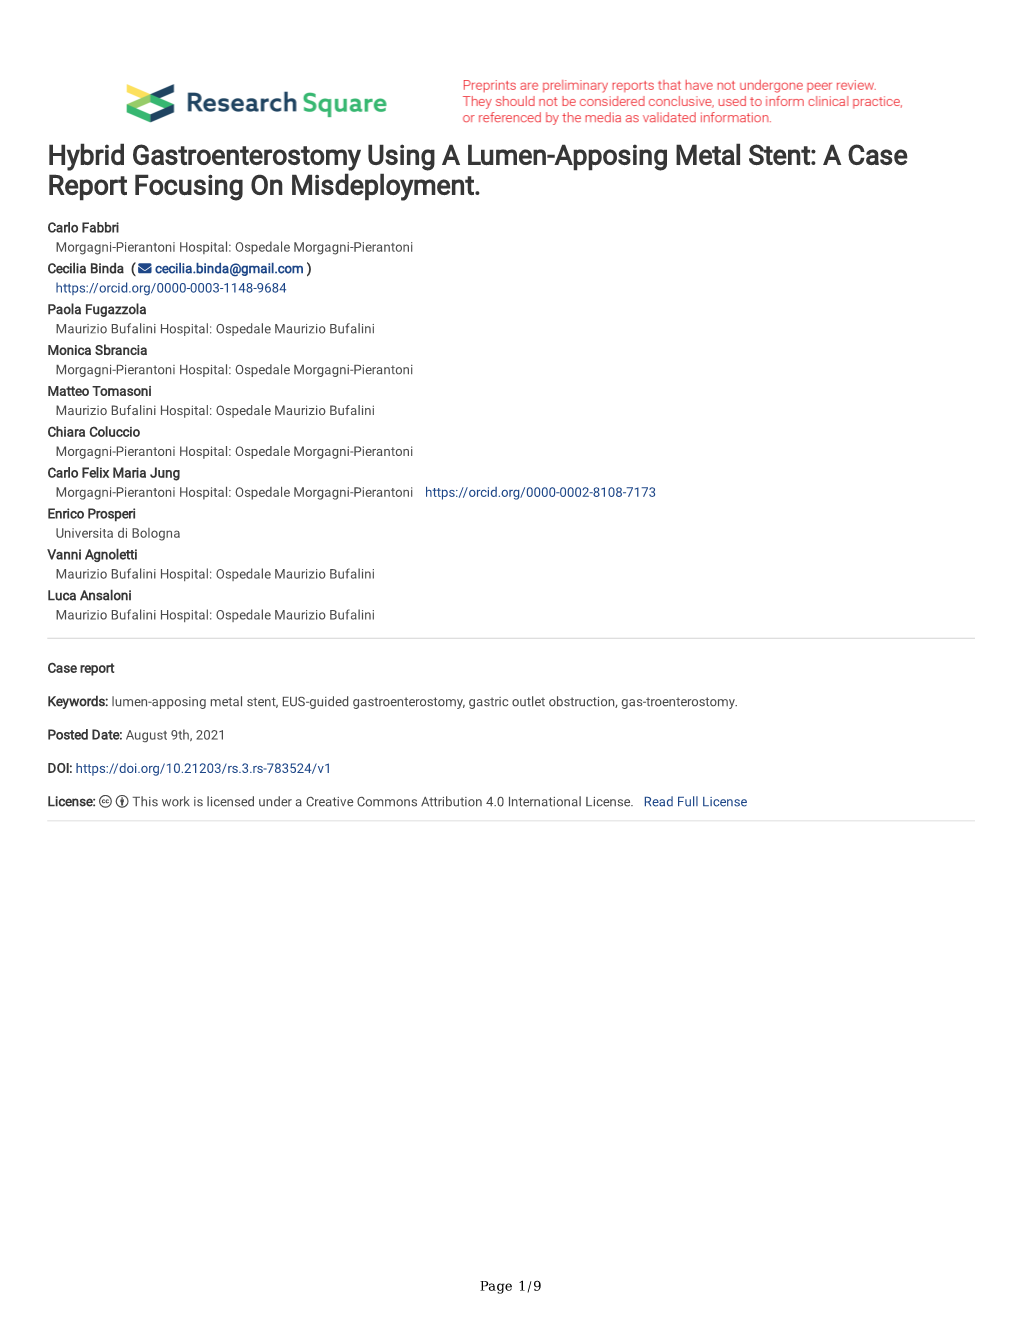 Hybrid Gastroenterostomy Using a Lumen-Apposing Metal Stent: a Case Report Focusing on Misdeployment